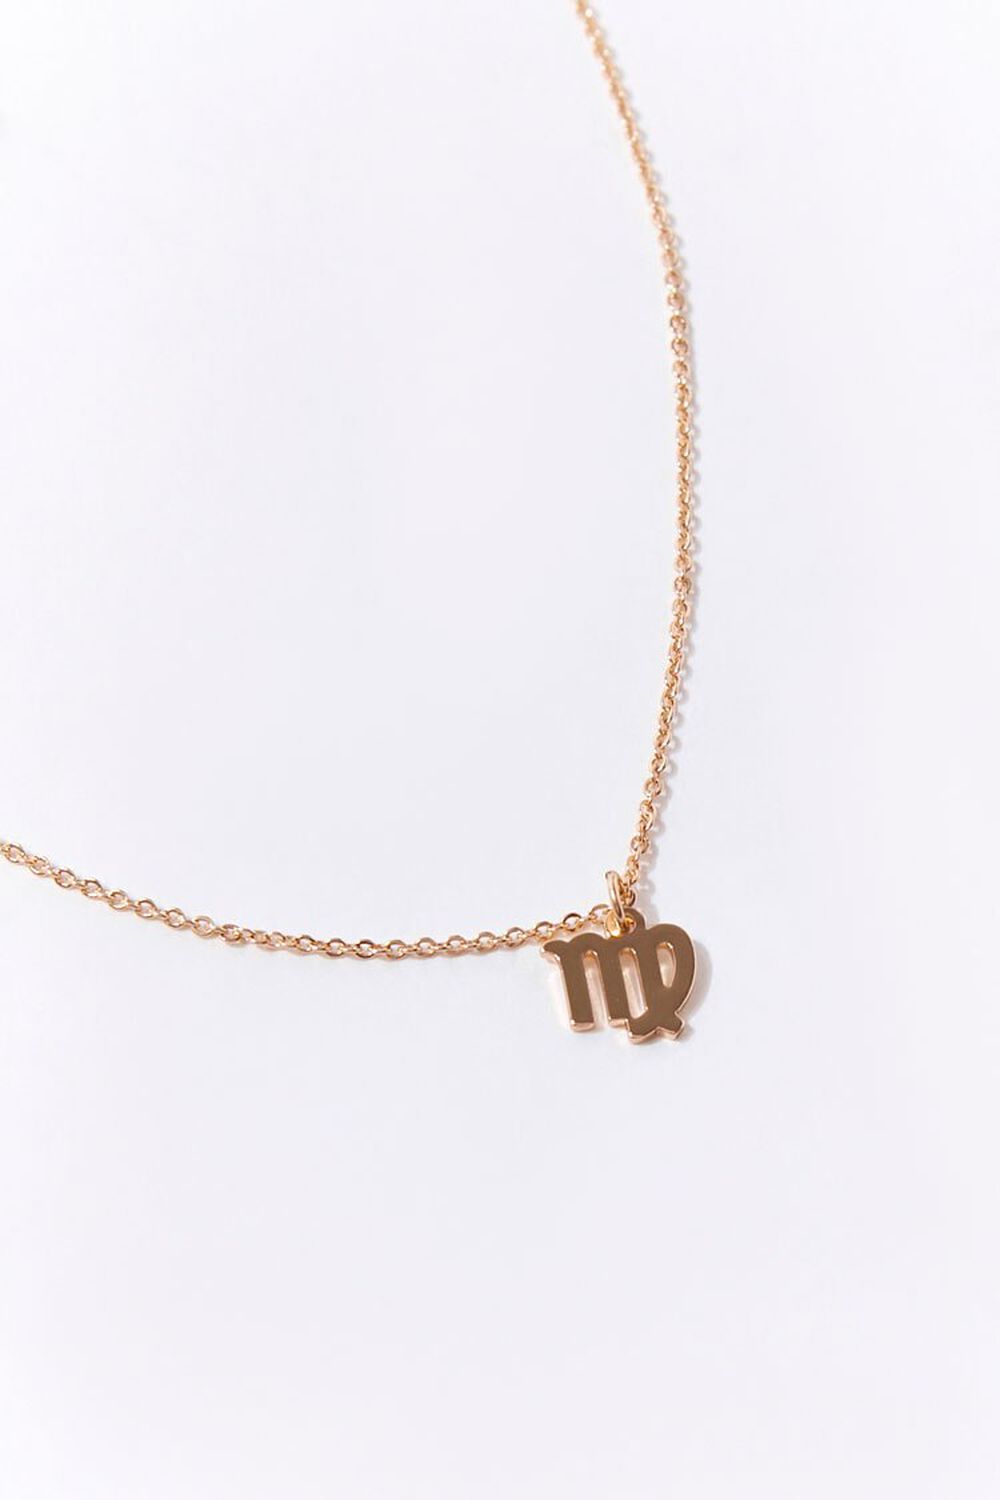 GOLD Virgo Charm Necklace, image 1